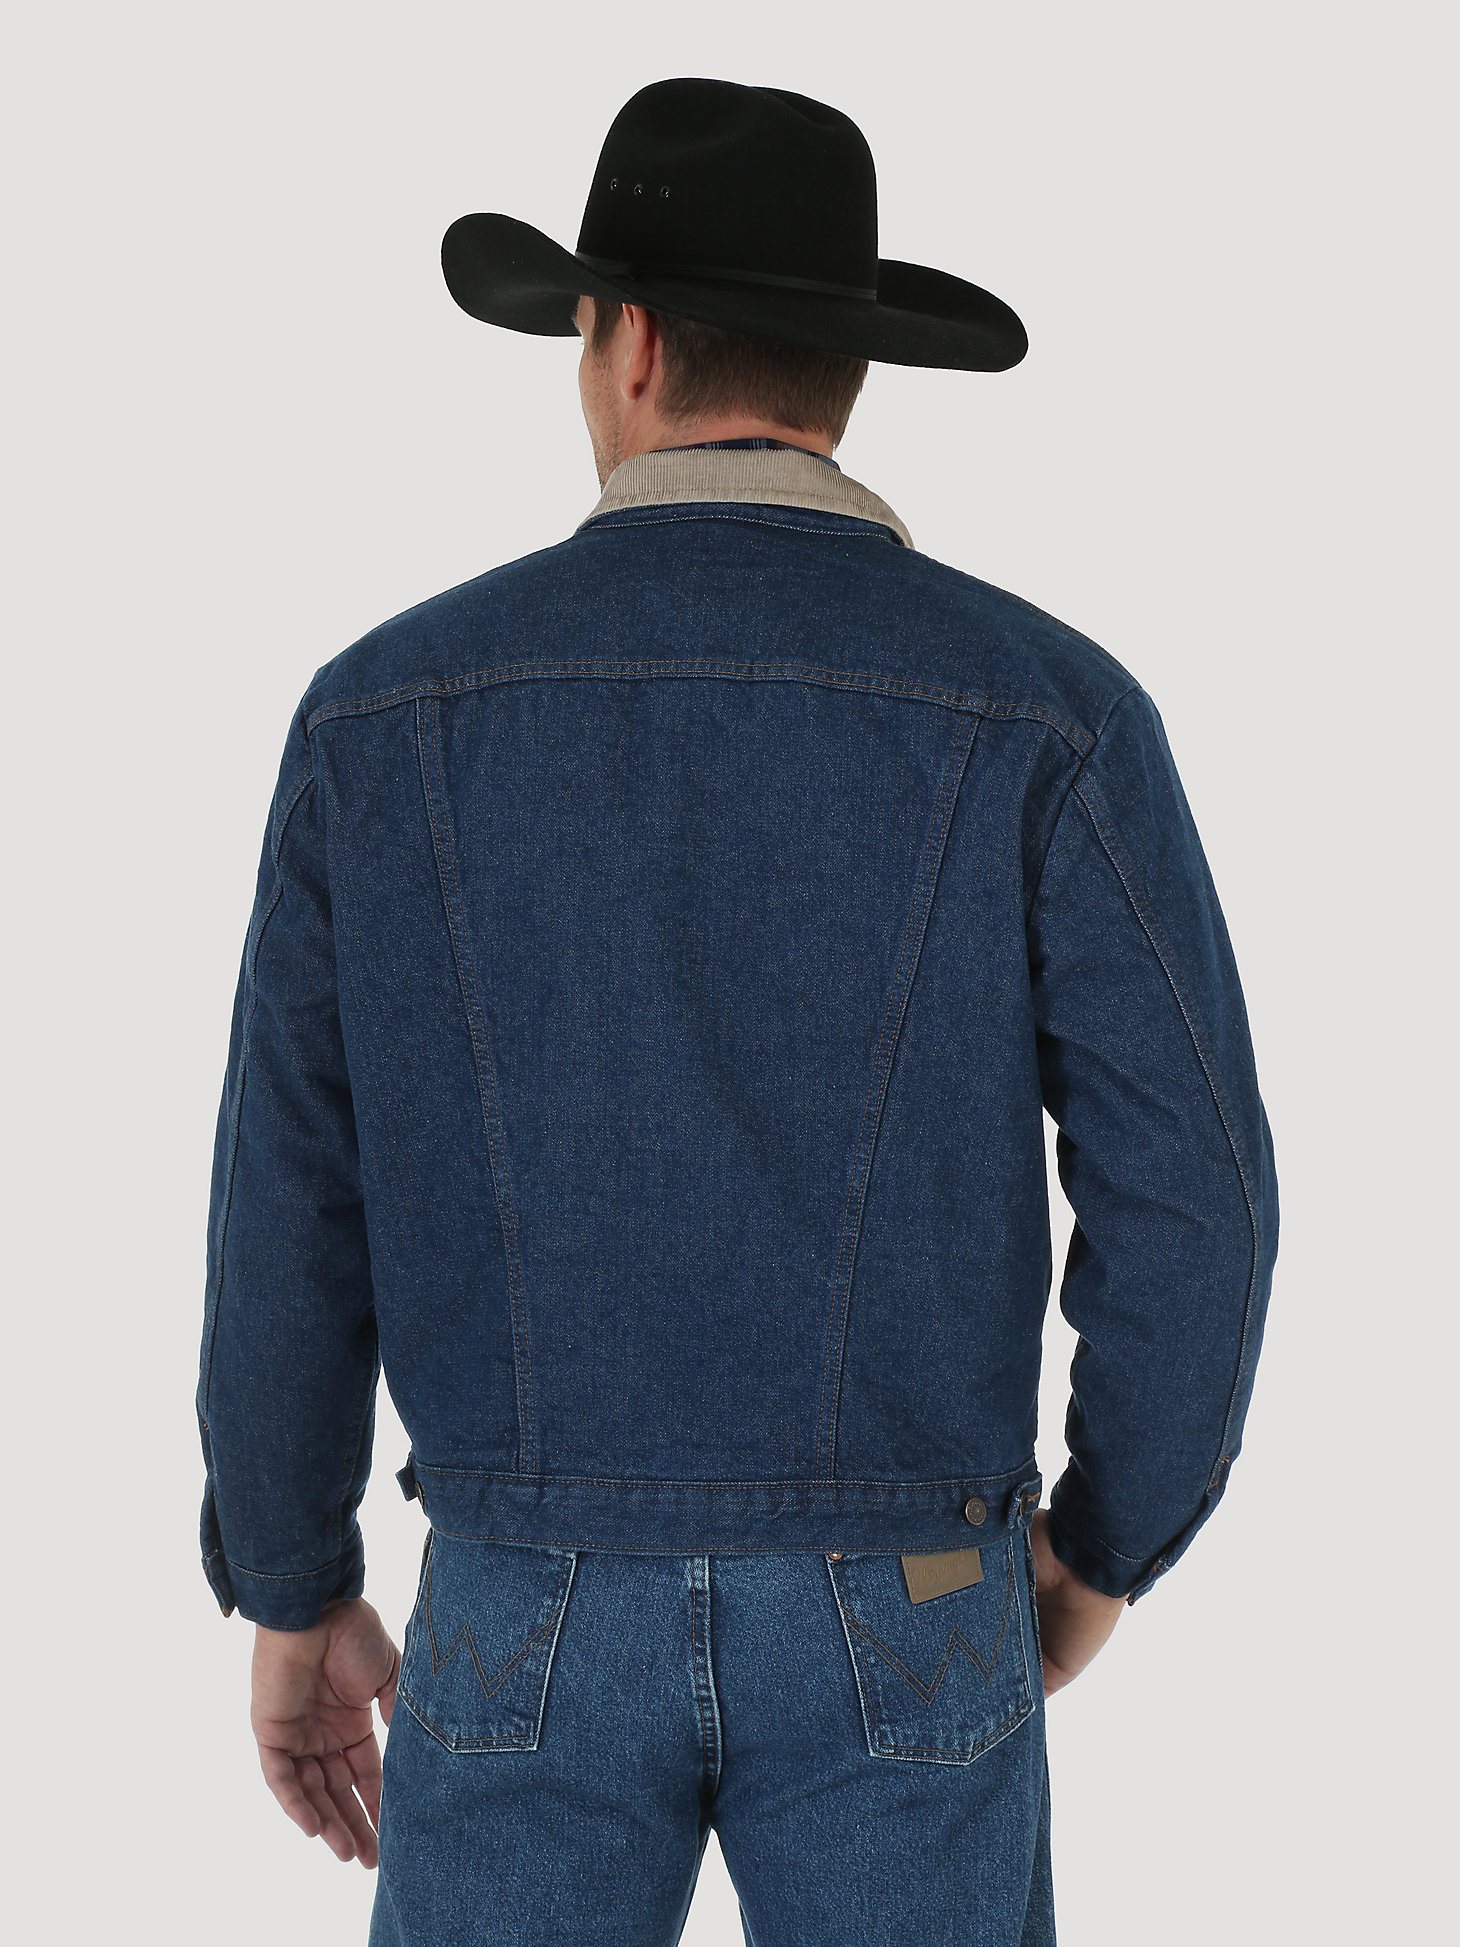 Men's Wrangler® Blanket Lined Corduroy Collar Denim Jacket (Big & Tall) in Prewashed Indigo alternative view 1